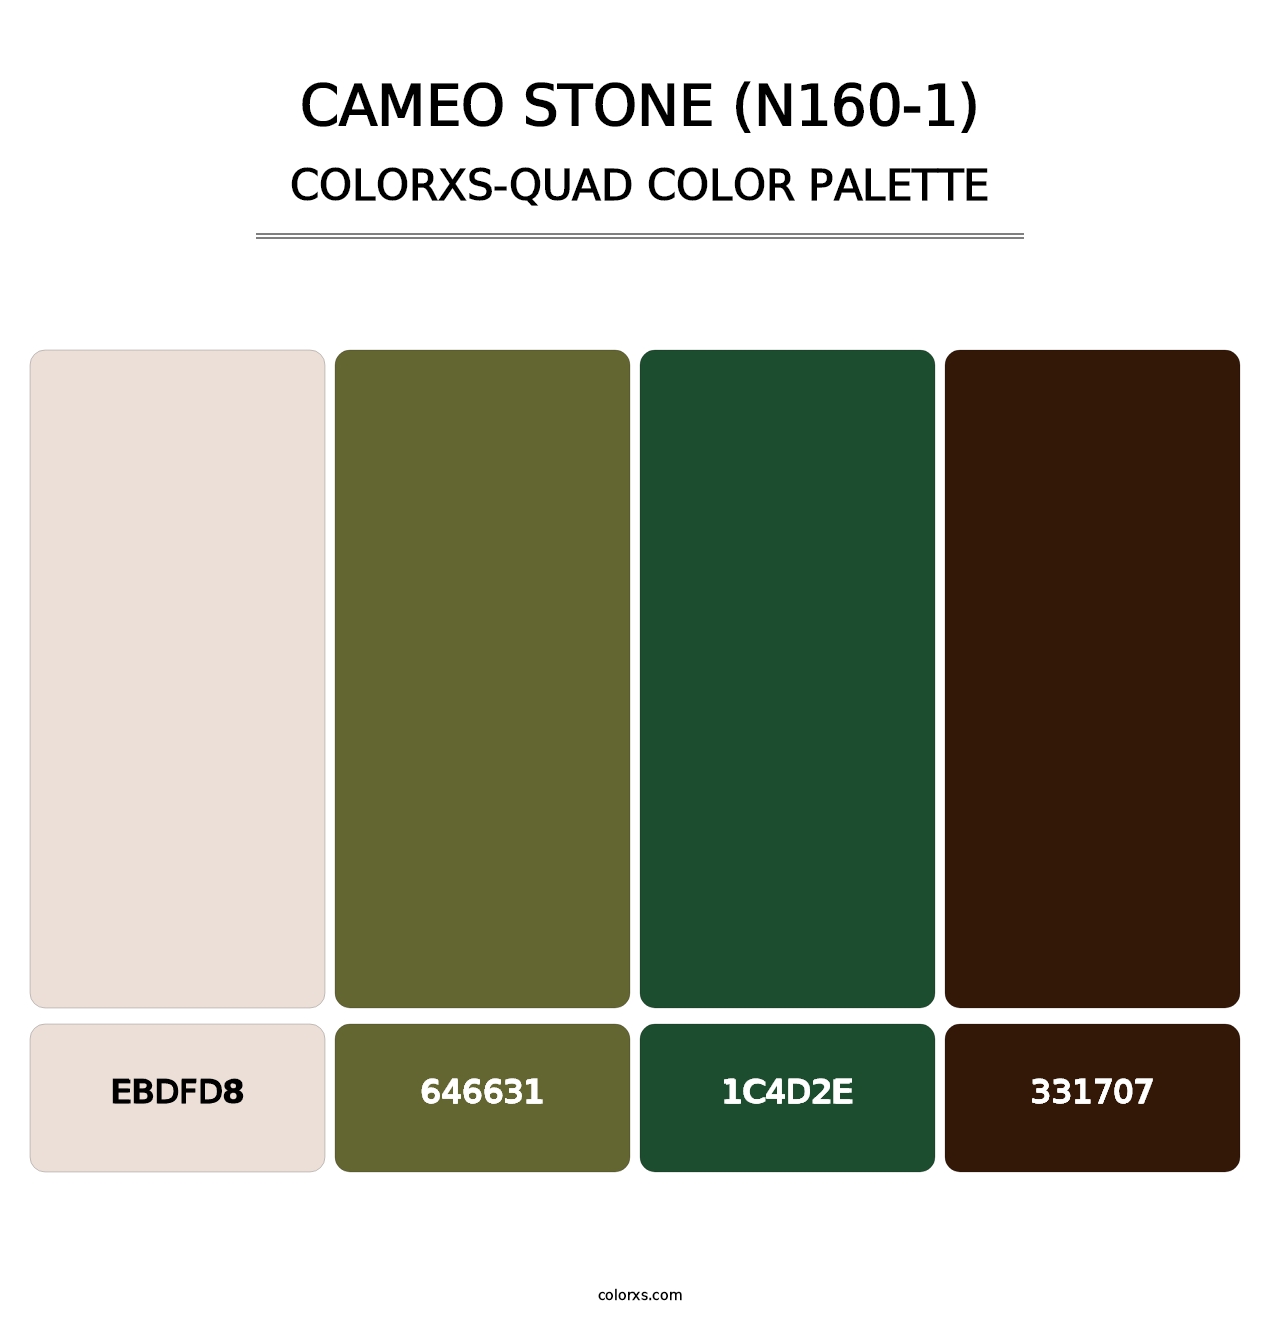 Cameo Stone (N160-1) - Colorxs Quad Palette